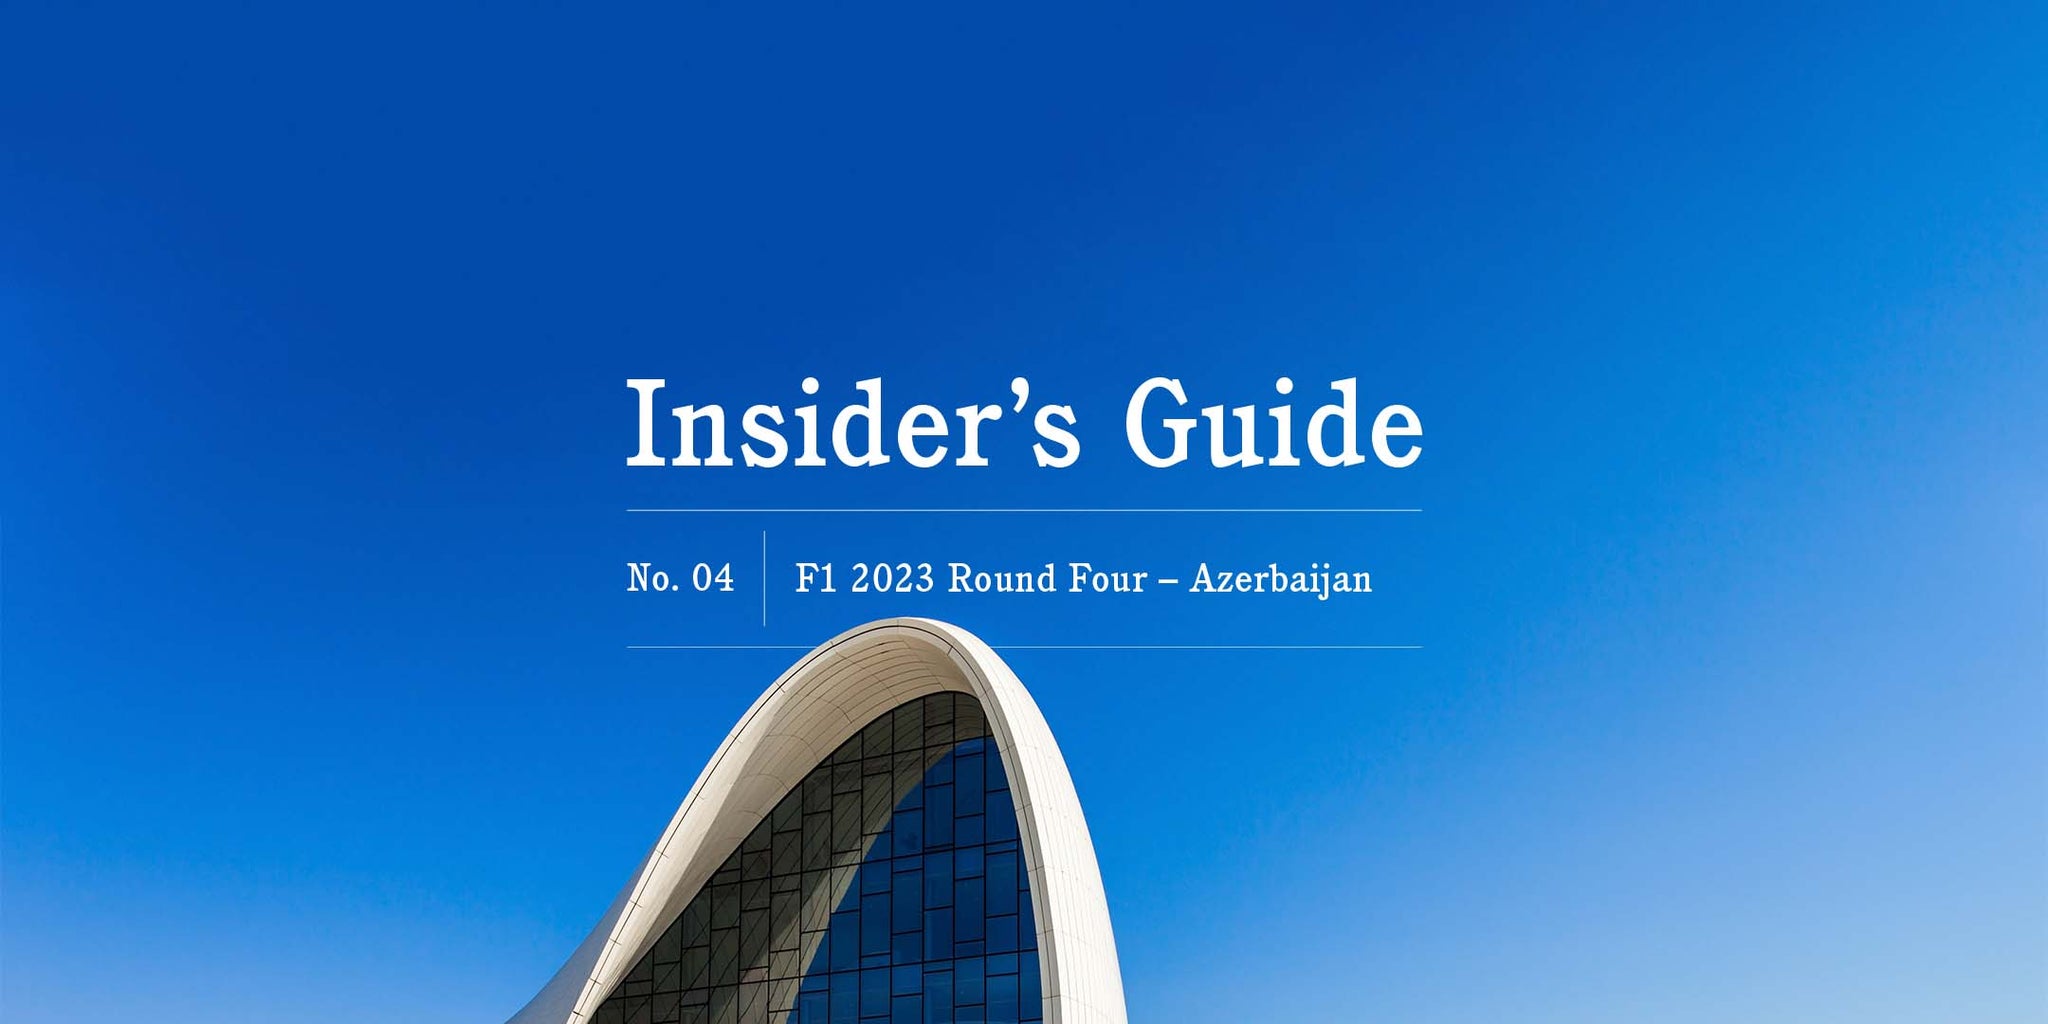 F1 2023 Insider's Guide No. 04 – Azerbaijan